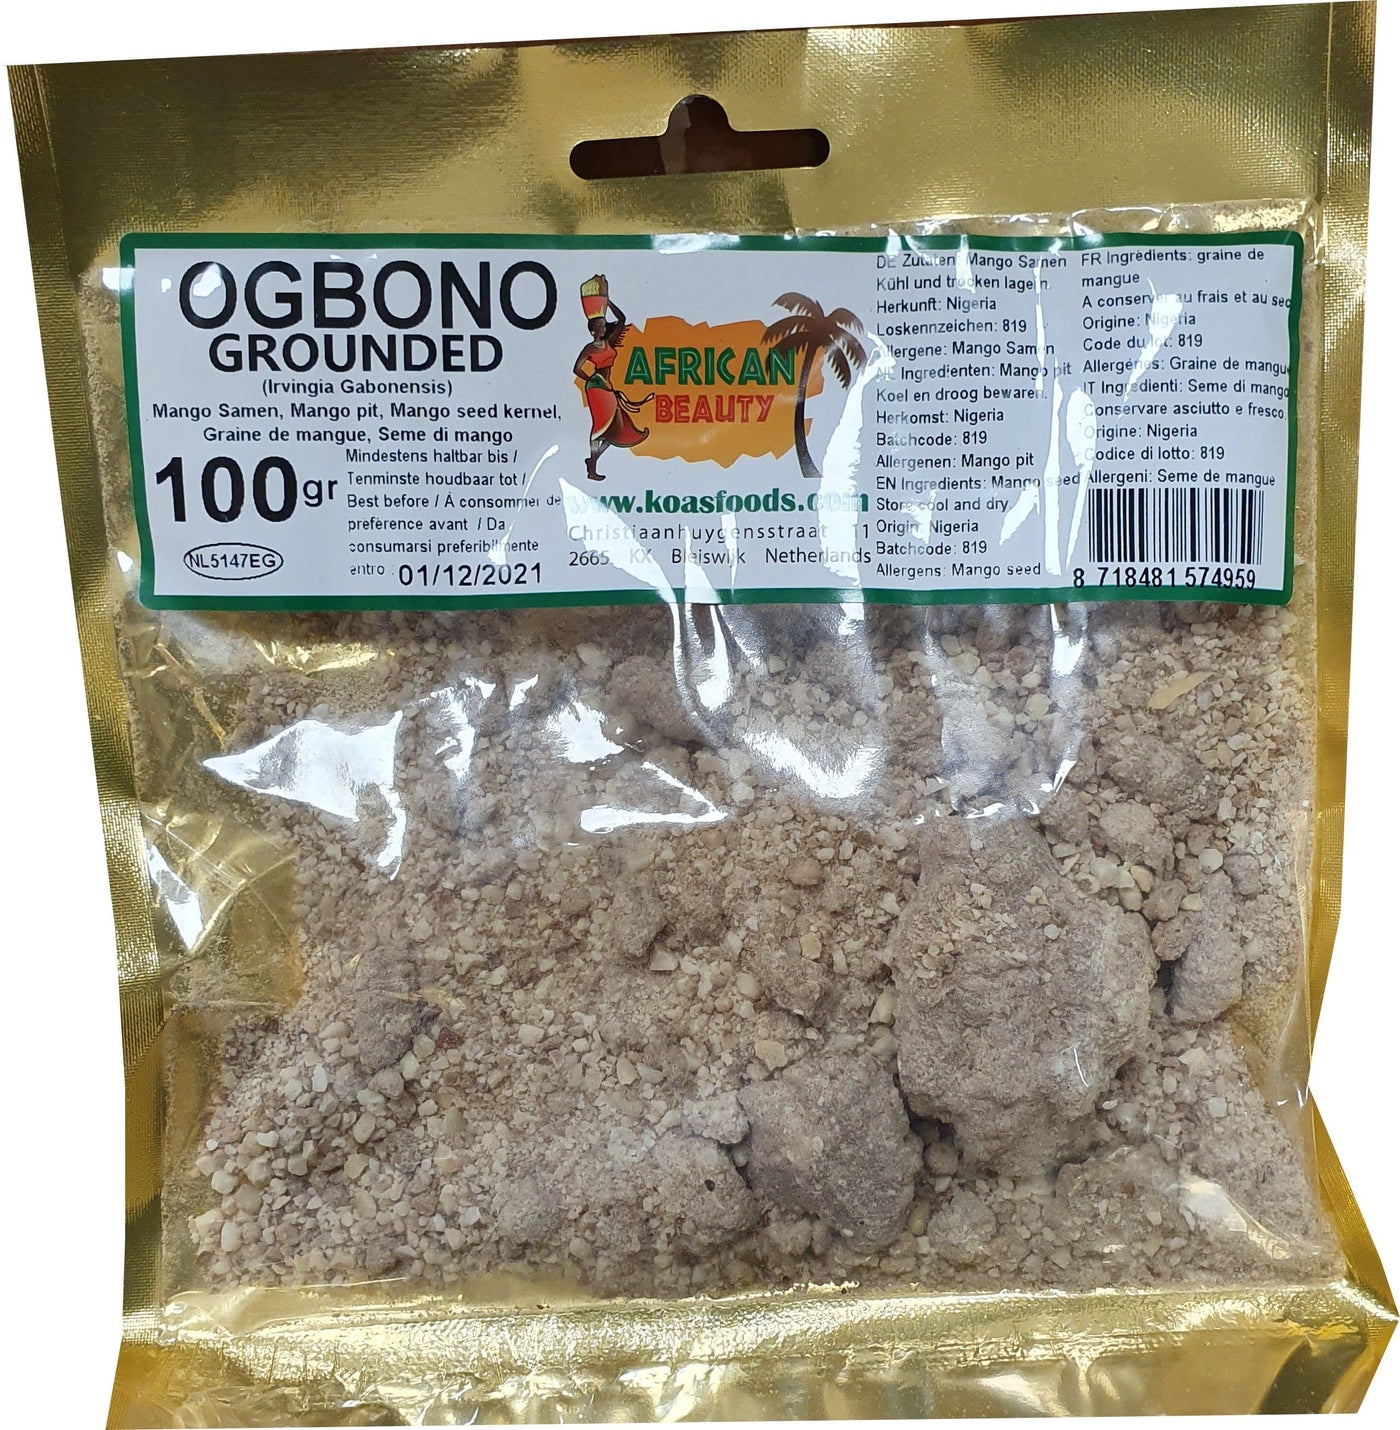 Nigeria Grounded Ogbono 50g